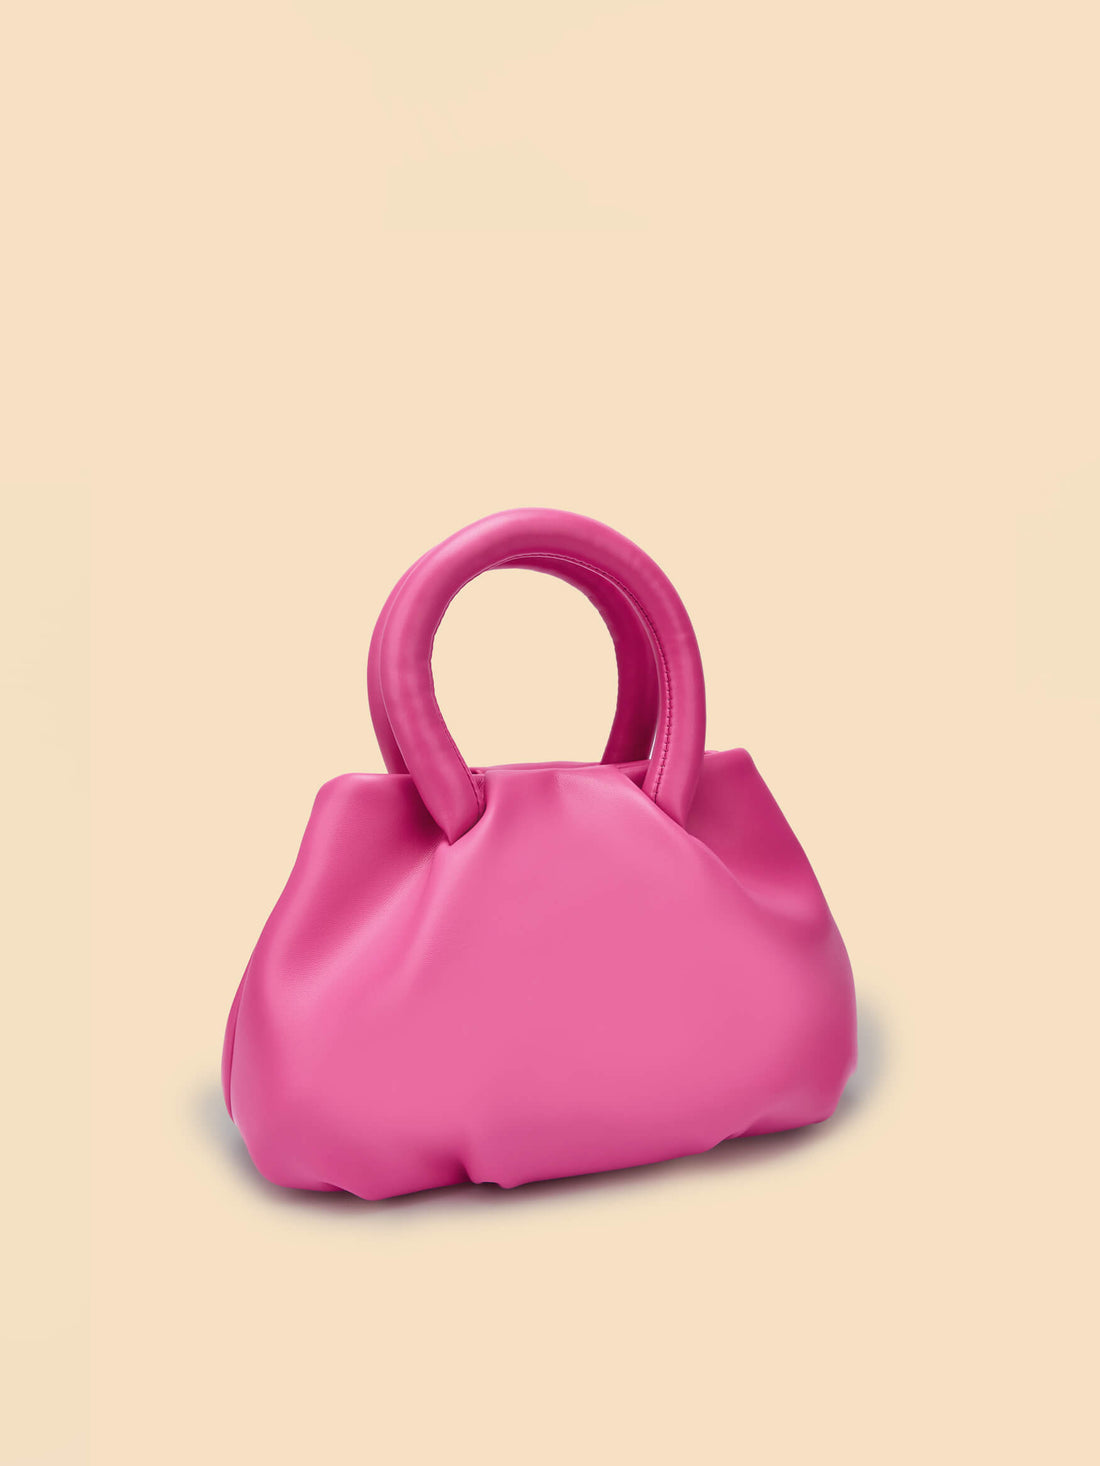 SINBONO Gal Bright Pink Leather Handbags -Vegan Leather Women Bag